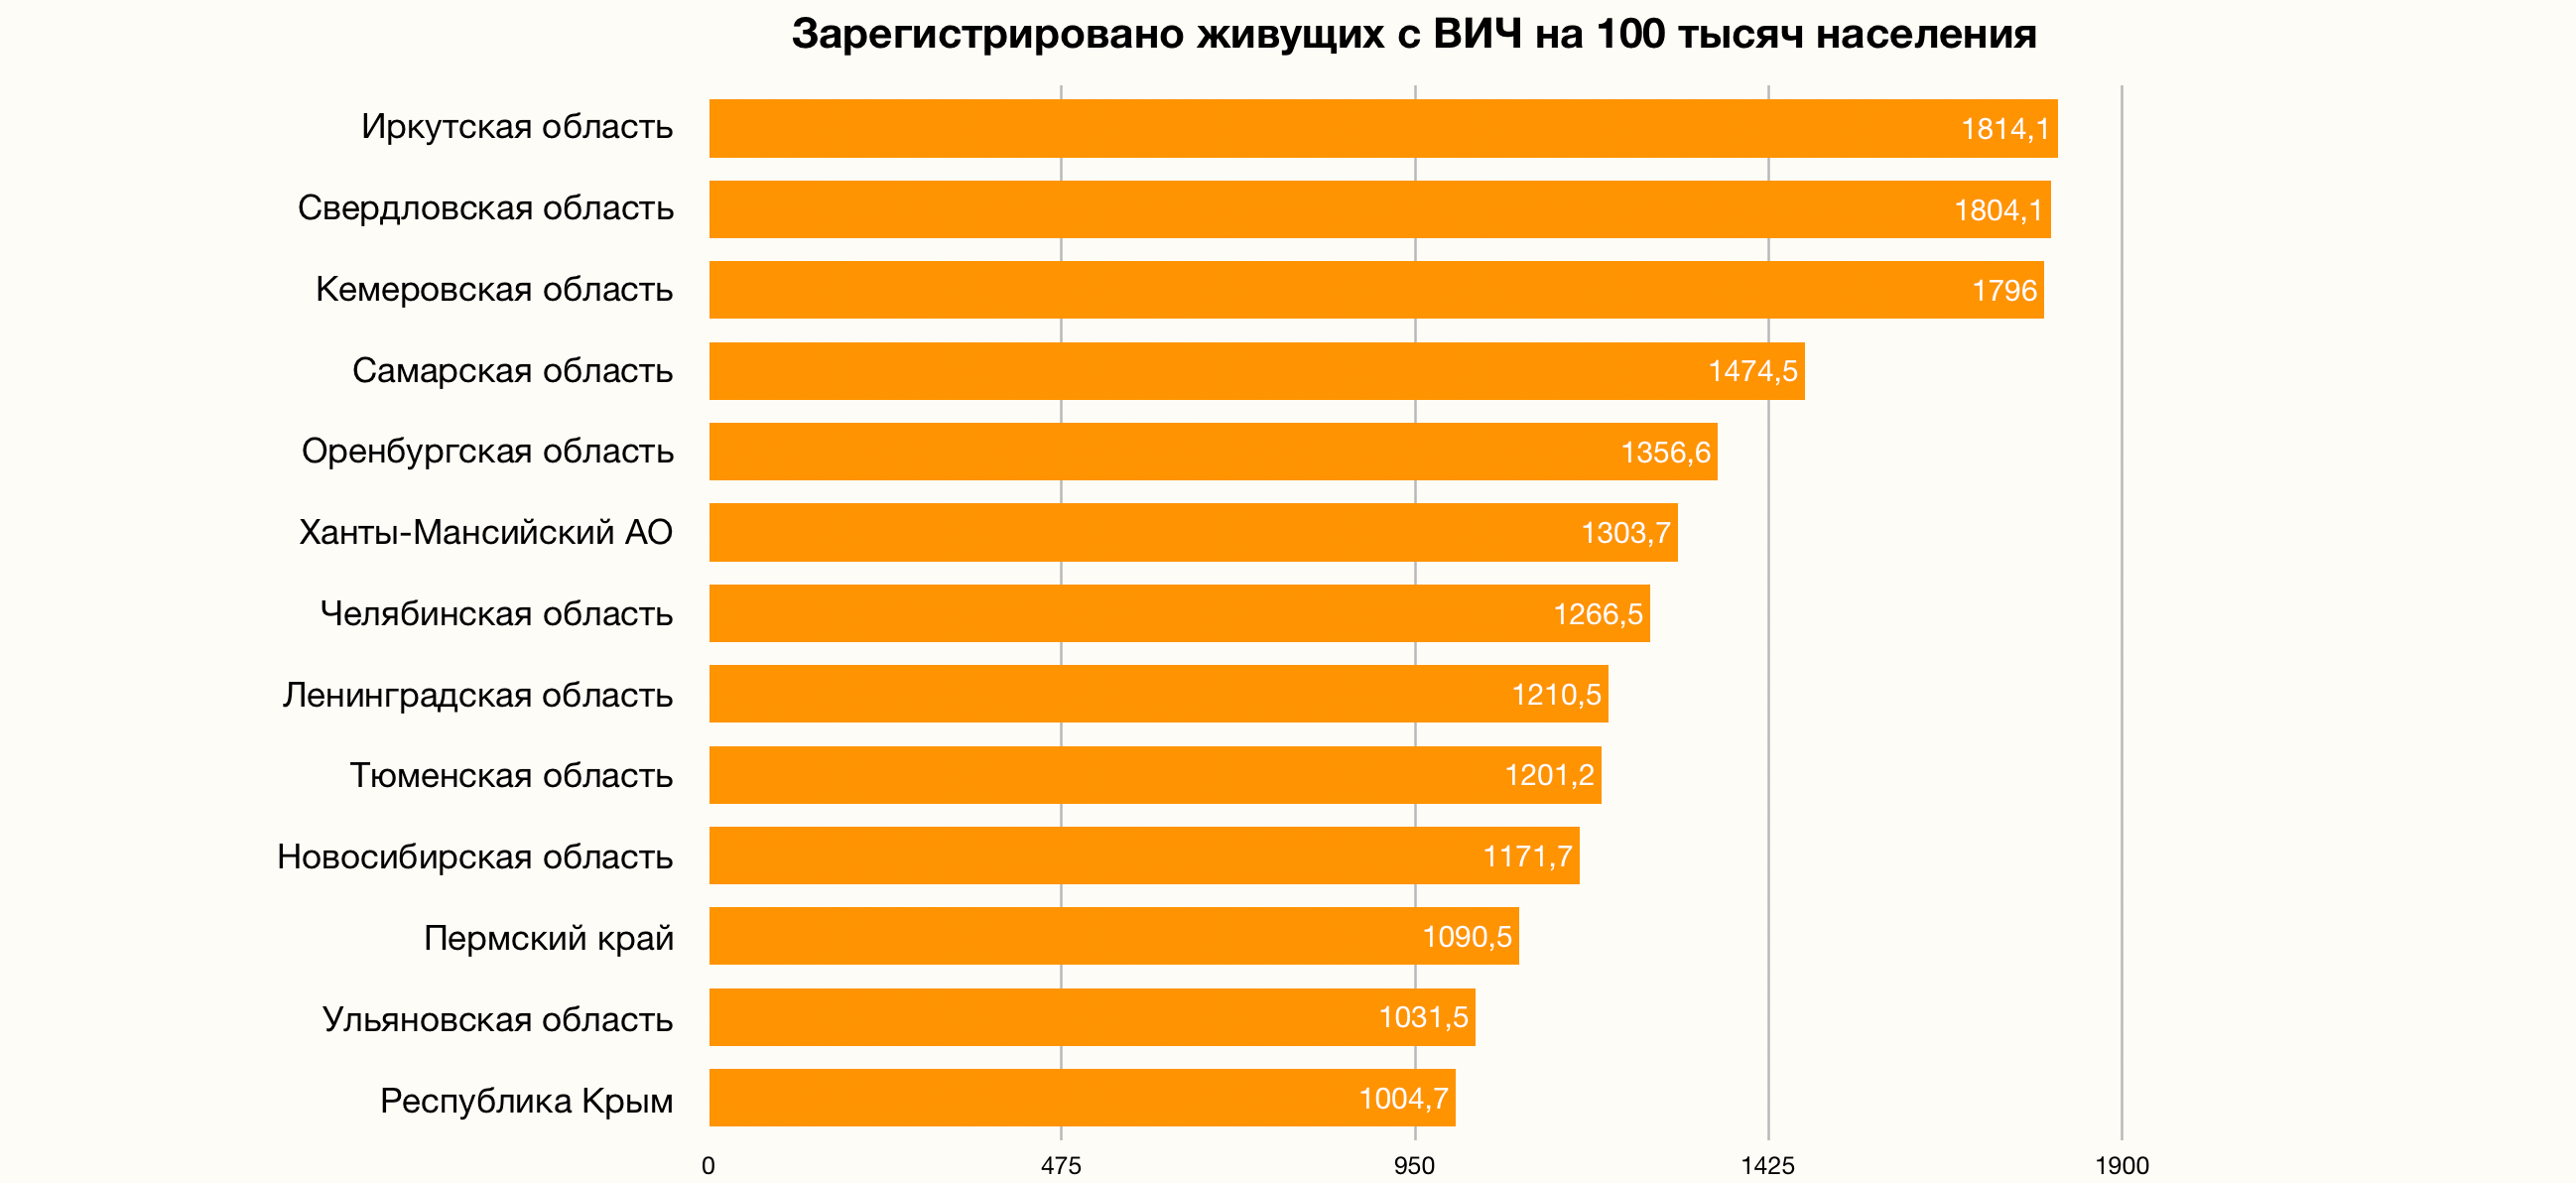 статистика супружеских измен по россии фото 48